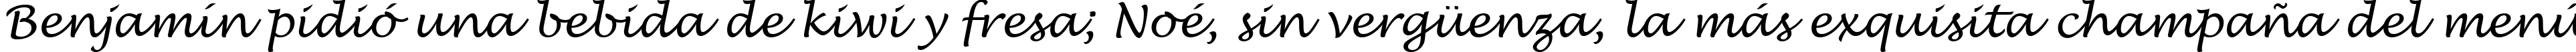 Пример написания шрифтом Lucida Handwriting Italic текста на испанском